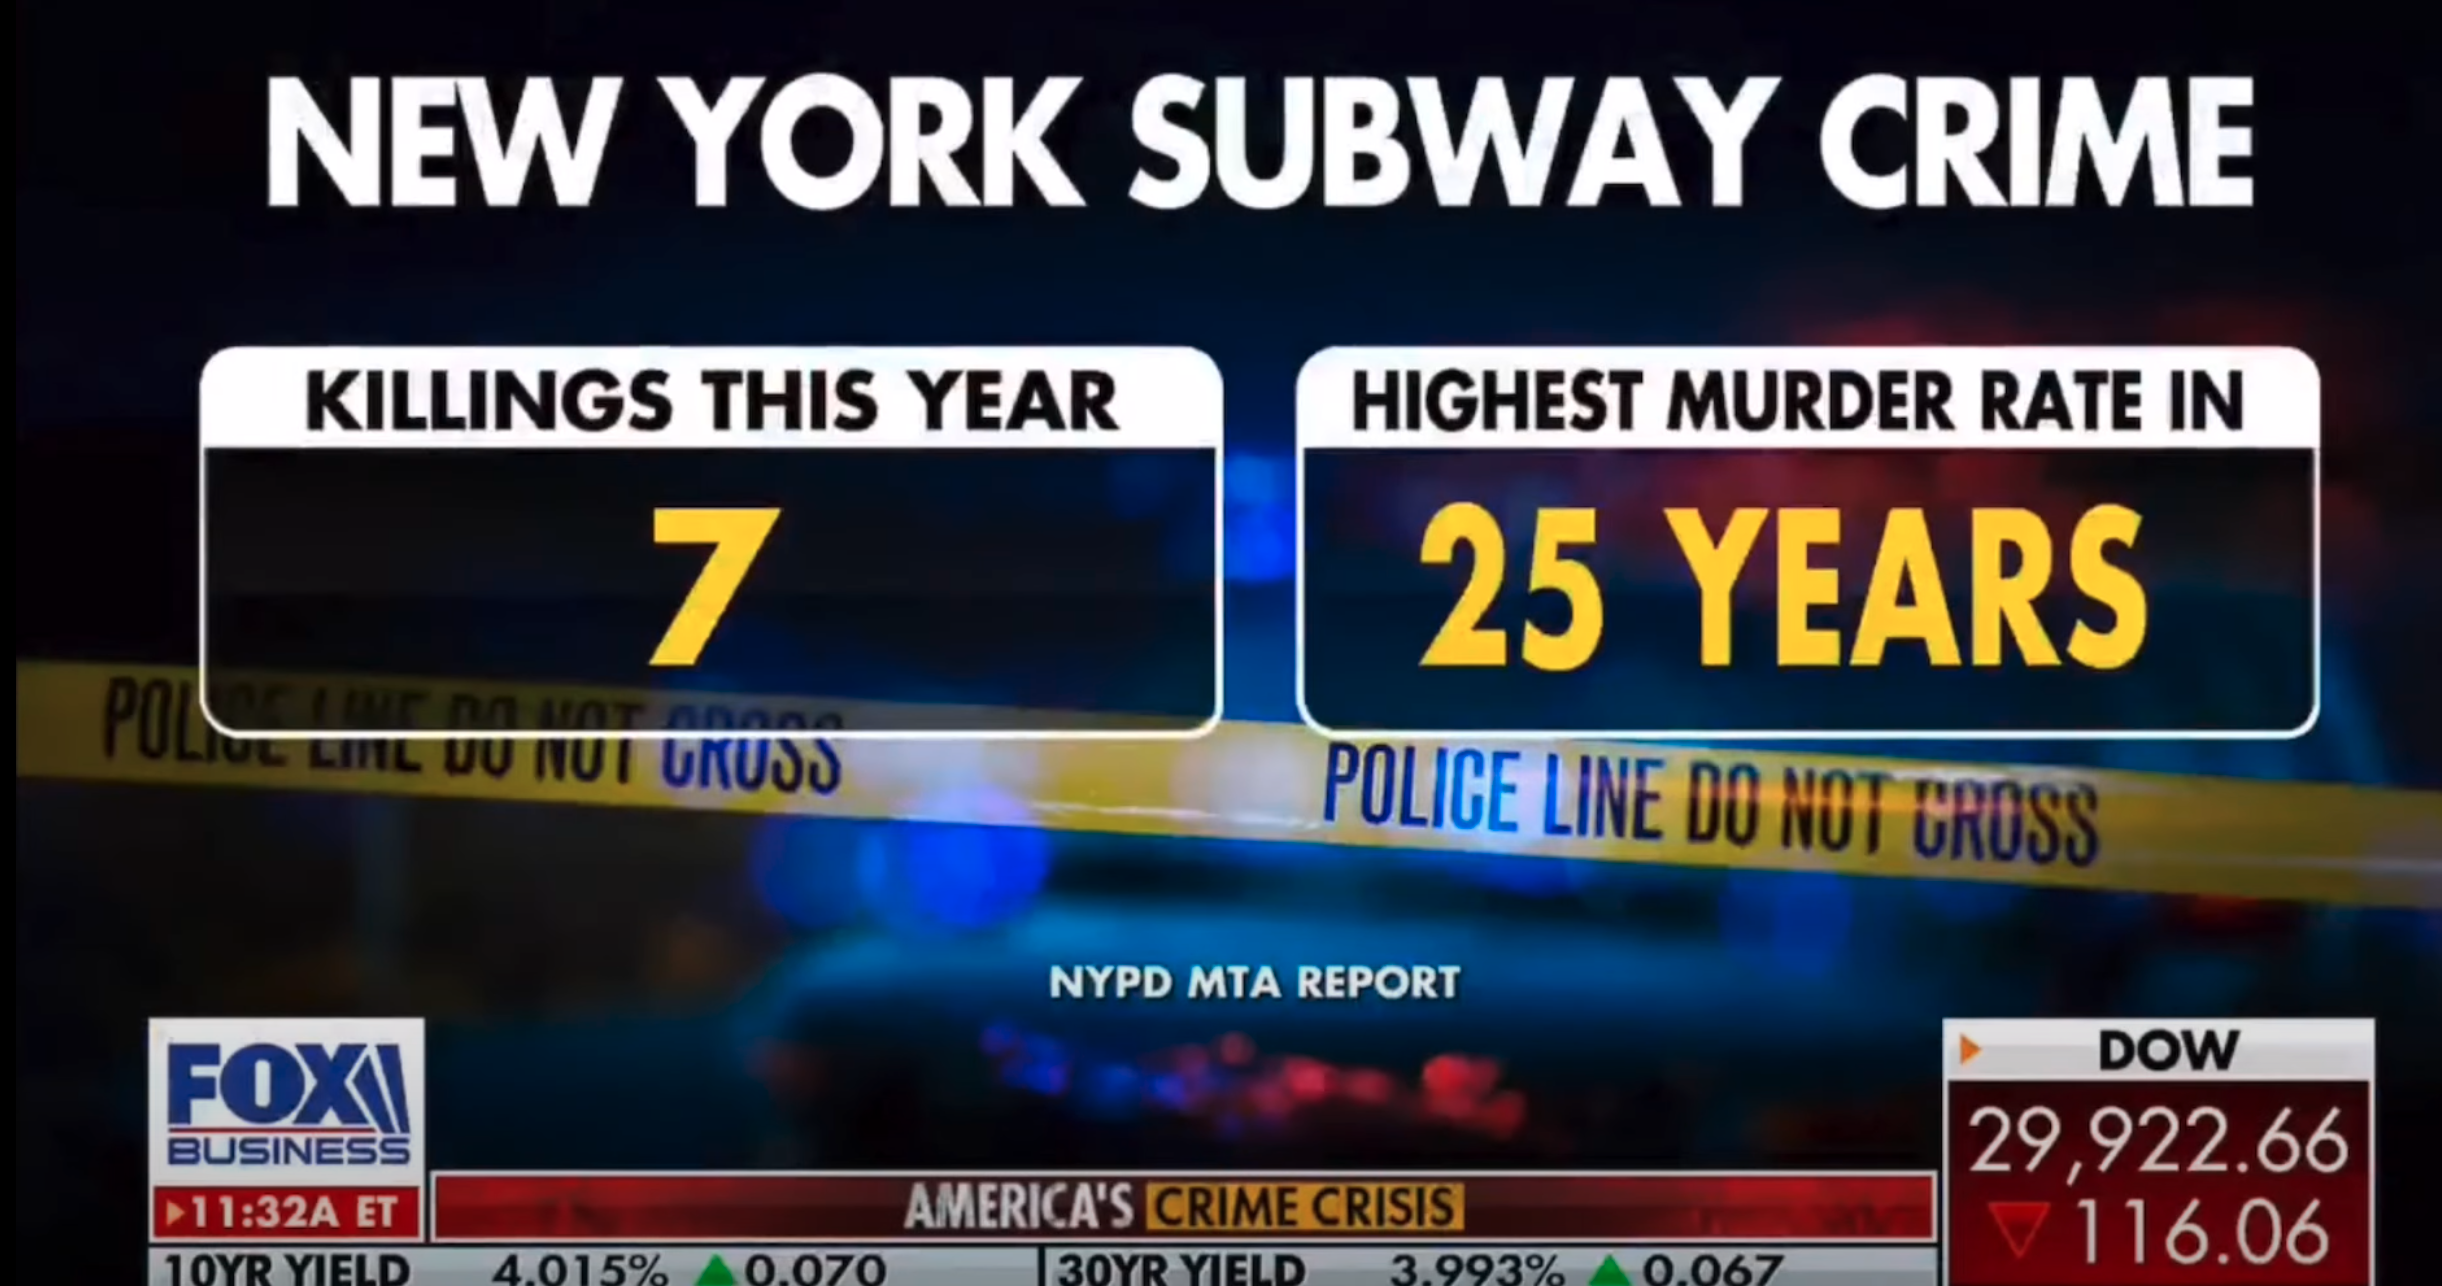 Joe Borelli discusses NYC Subway Crime with Varney on FoxNews.